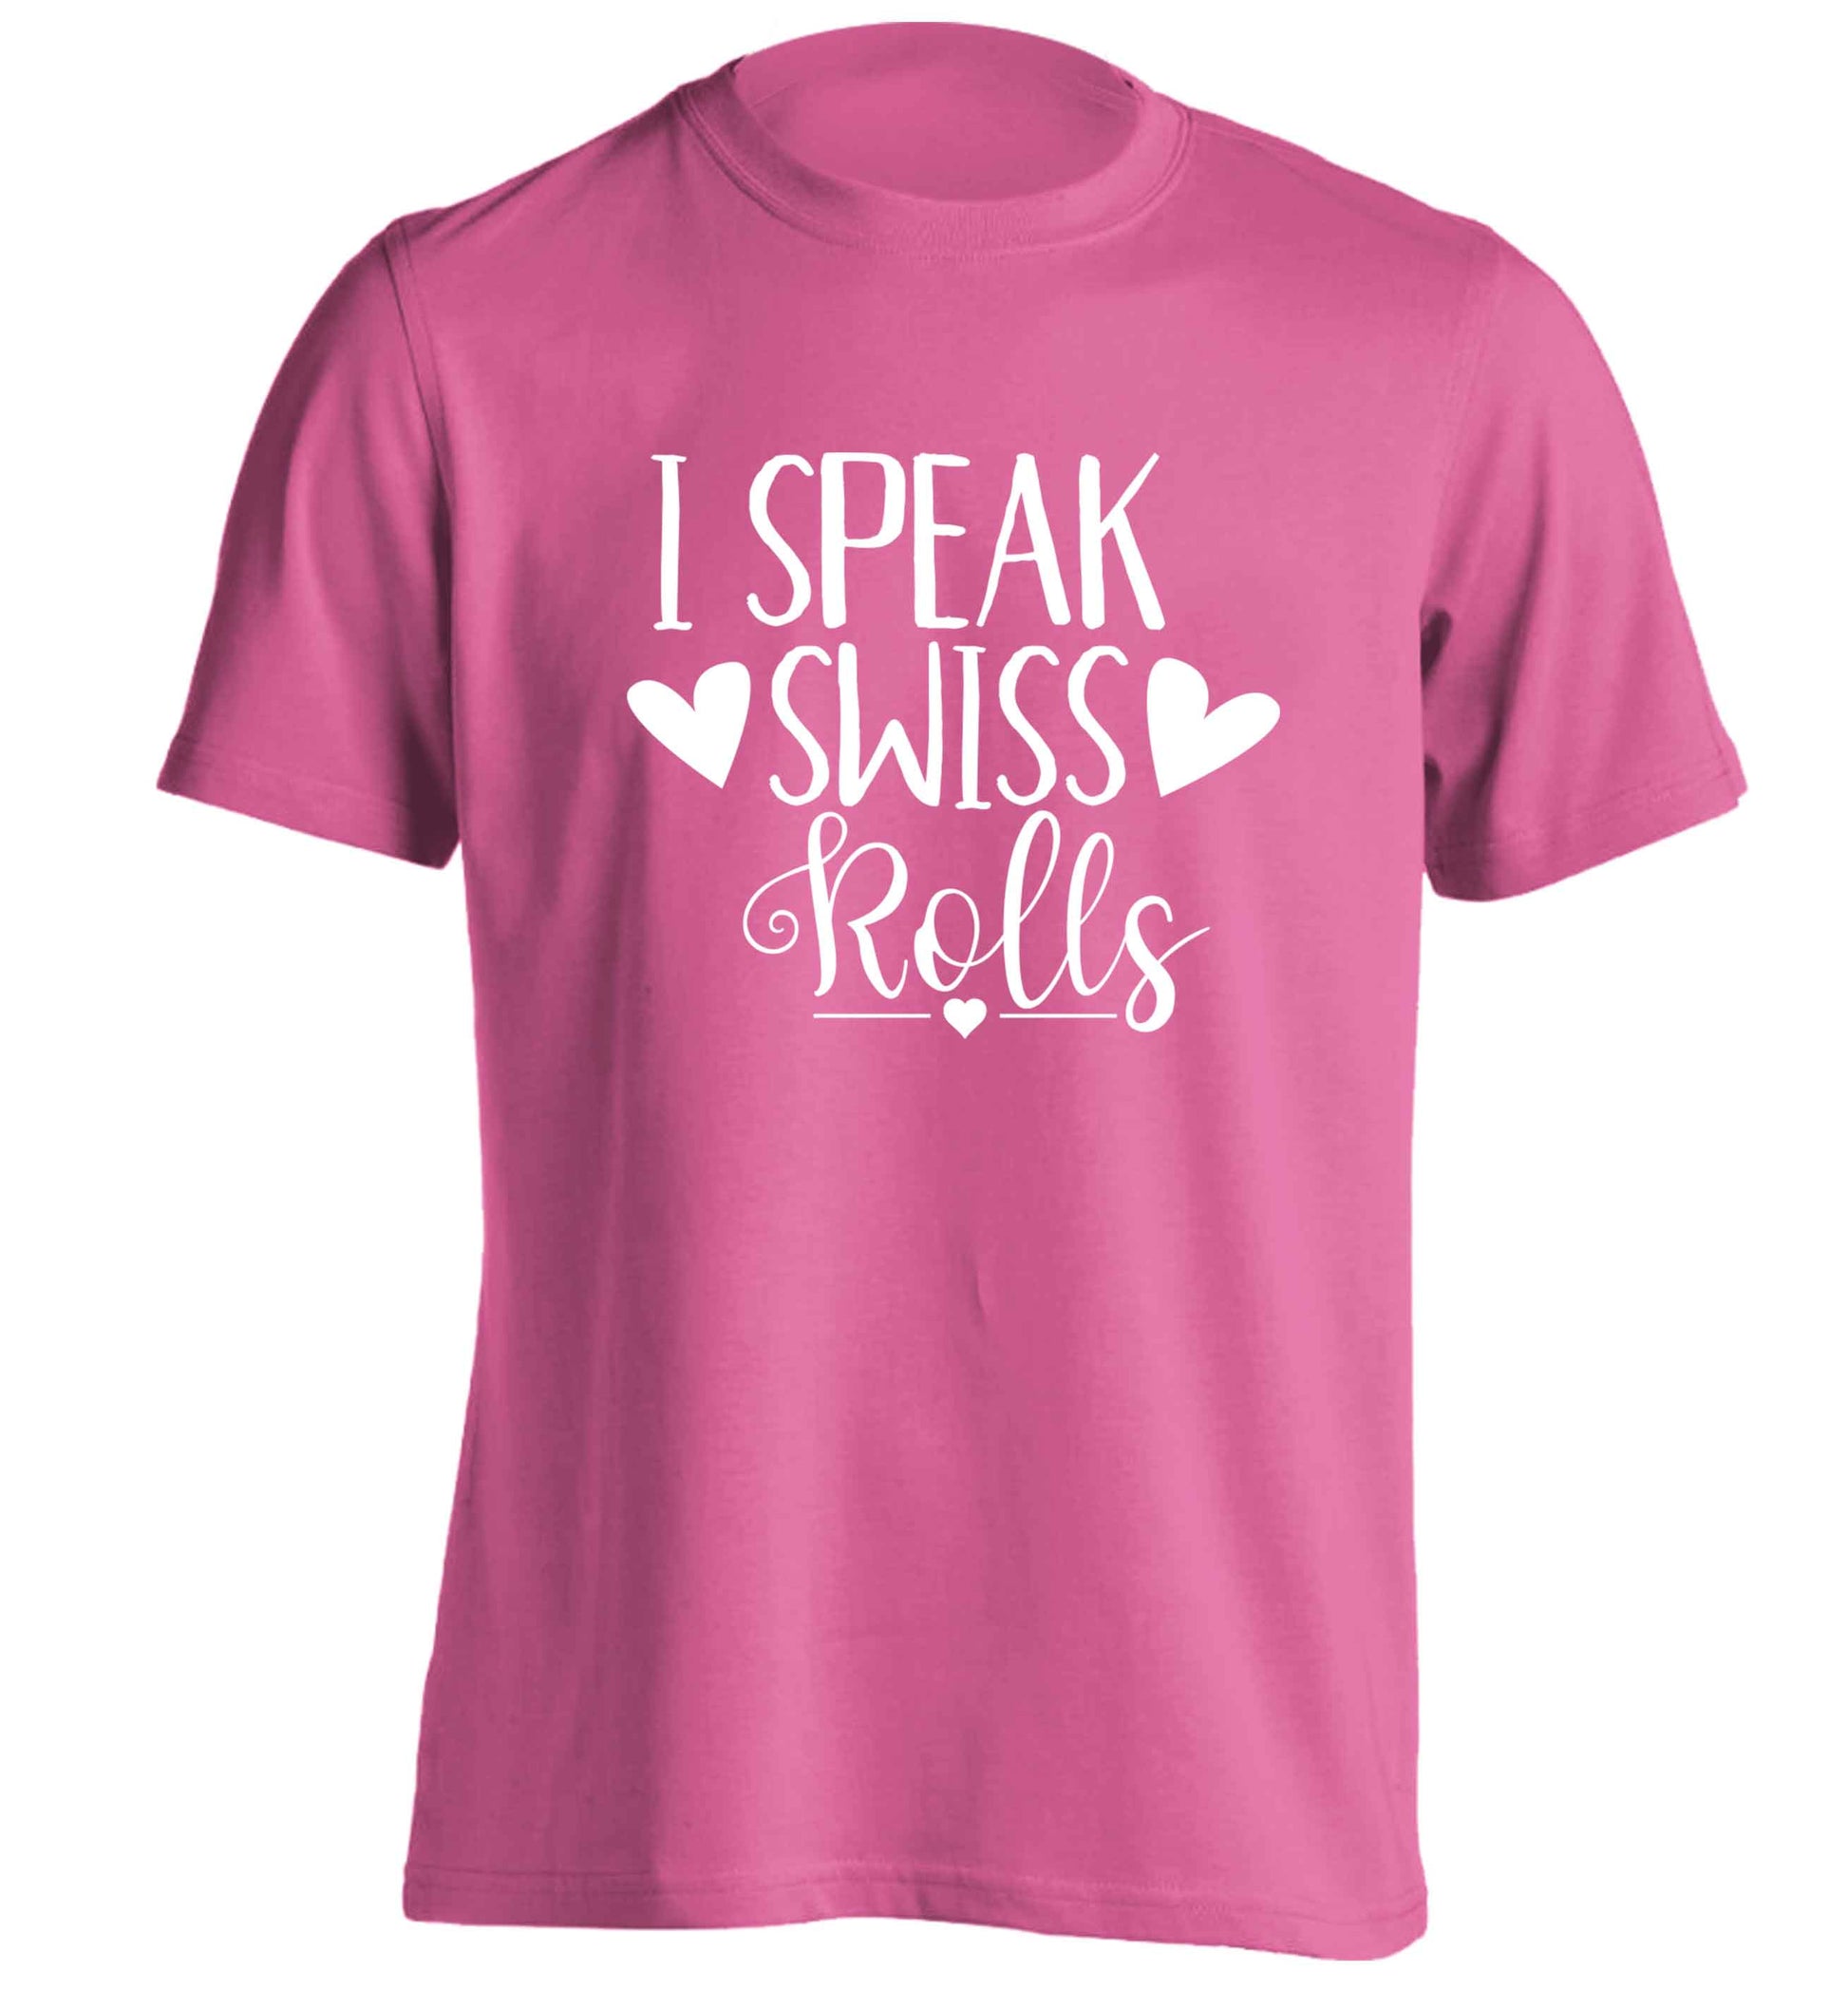 I speak swiss..rolls adults unisex pink Tshirt 2XL